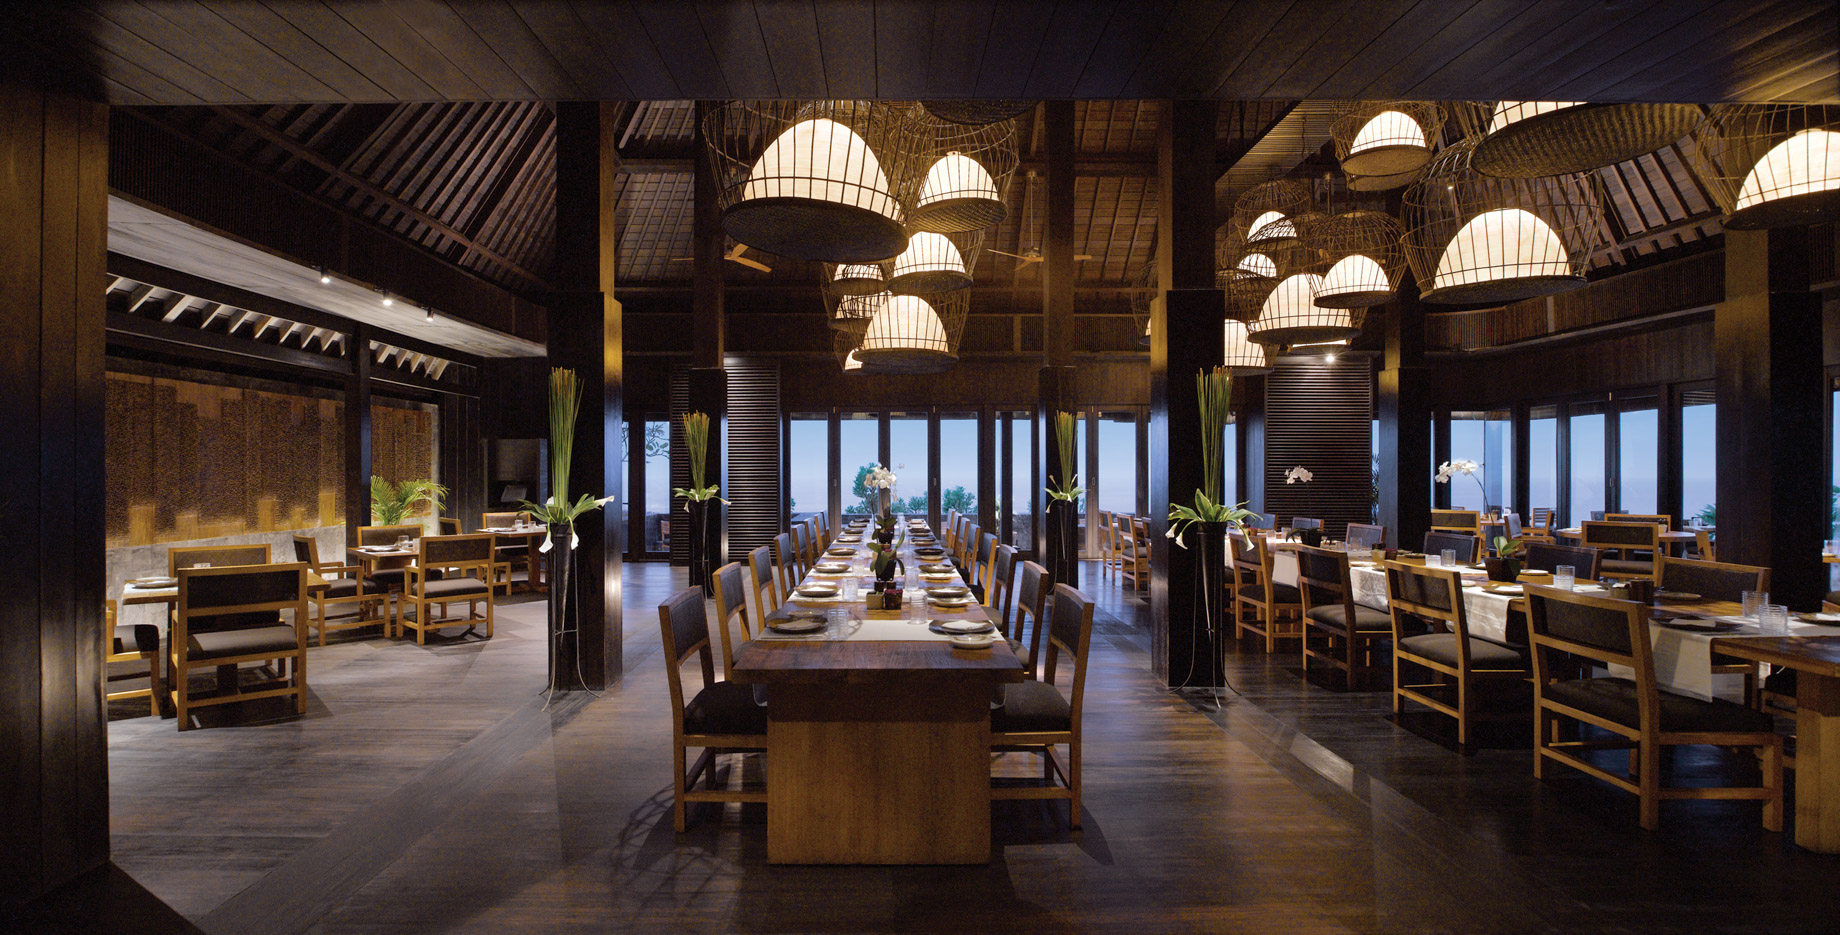 Bvlgari Resort Bali – Uluwatu, Bali, Indonesia – The Sangkar Restaurant